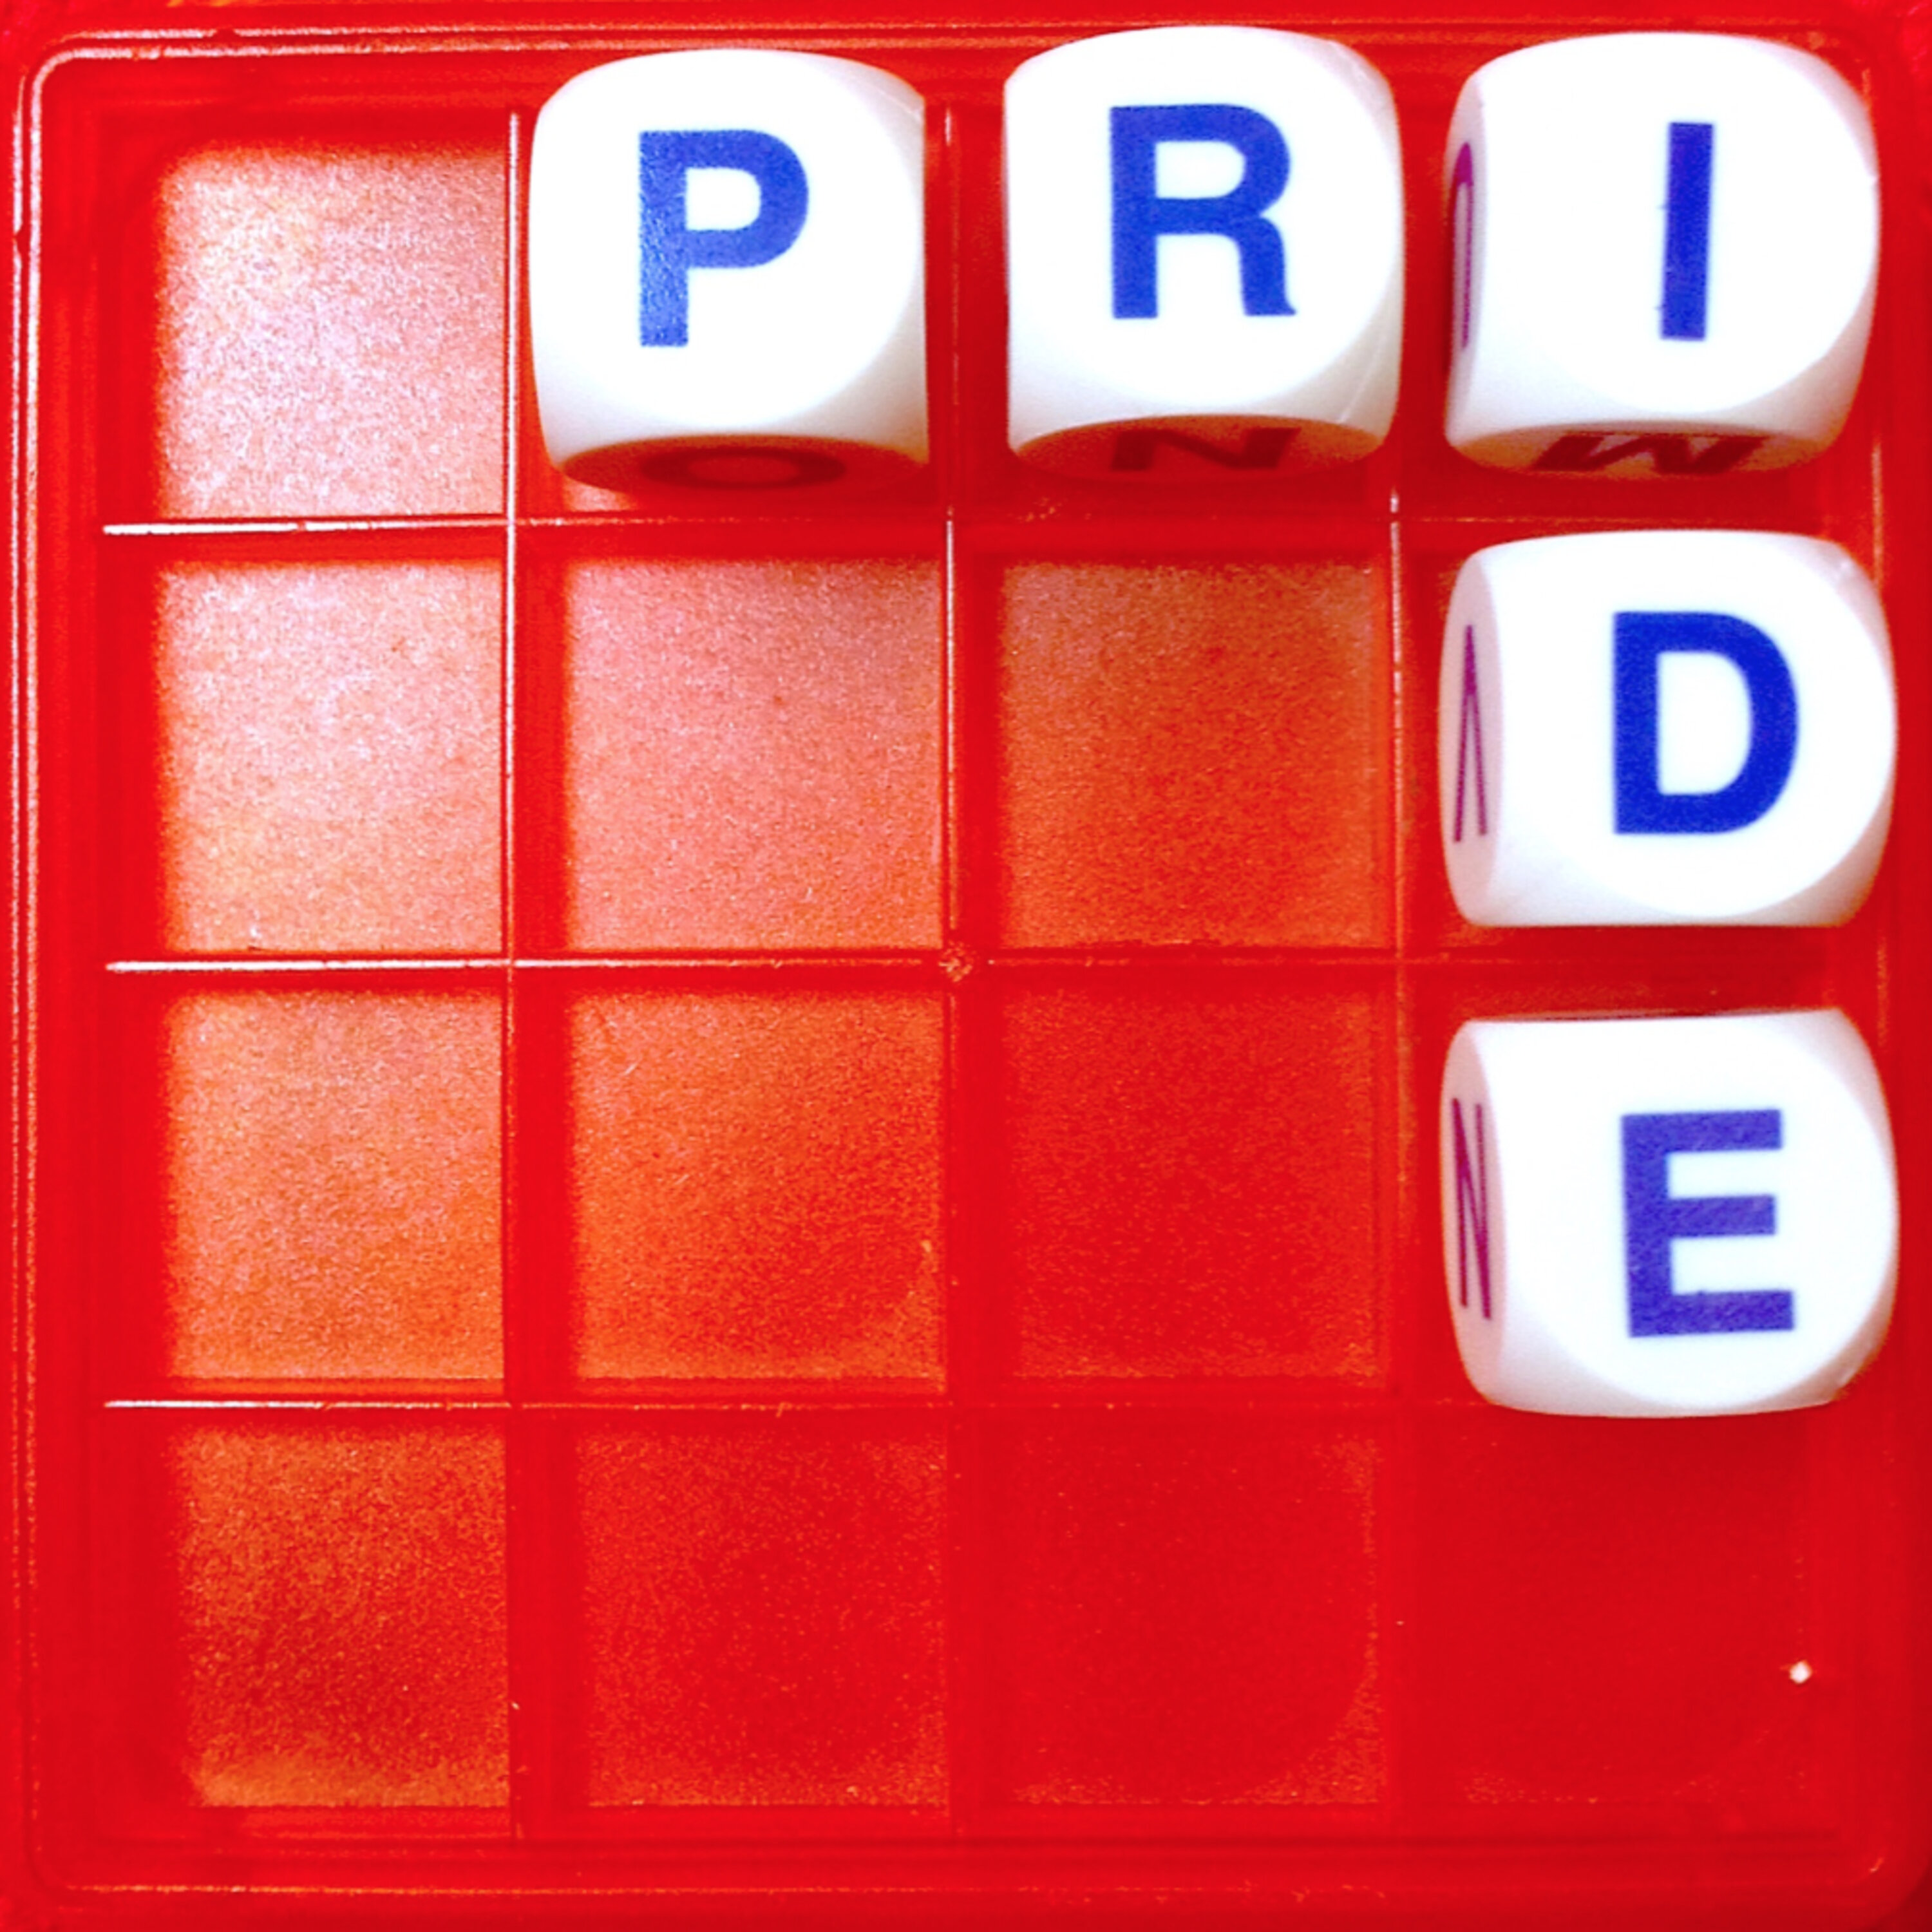 Thumbnail for "12. Pride".